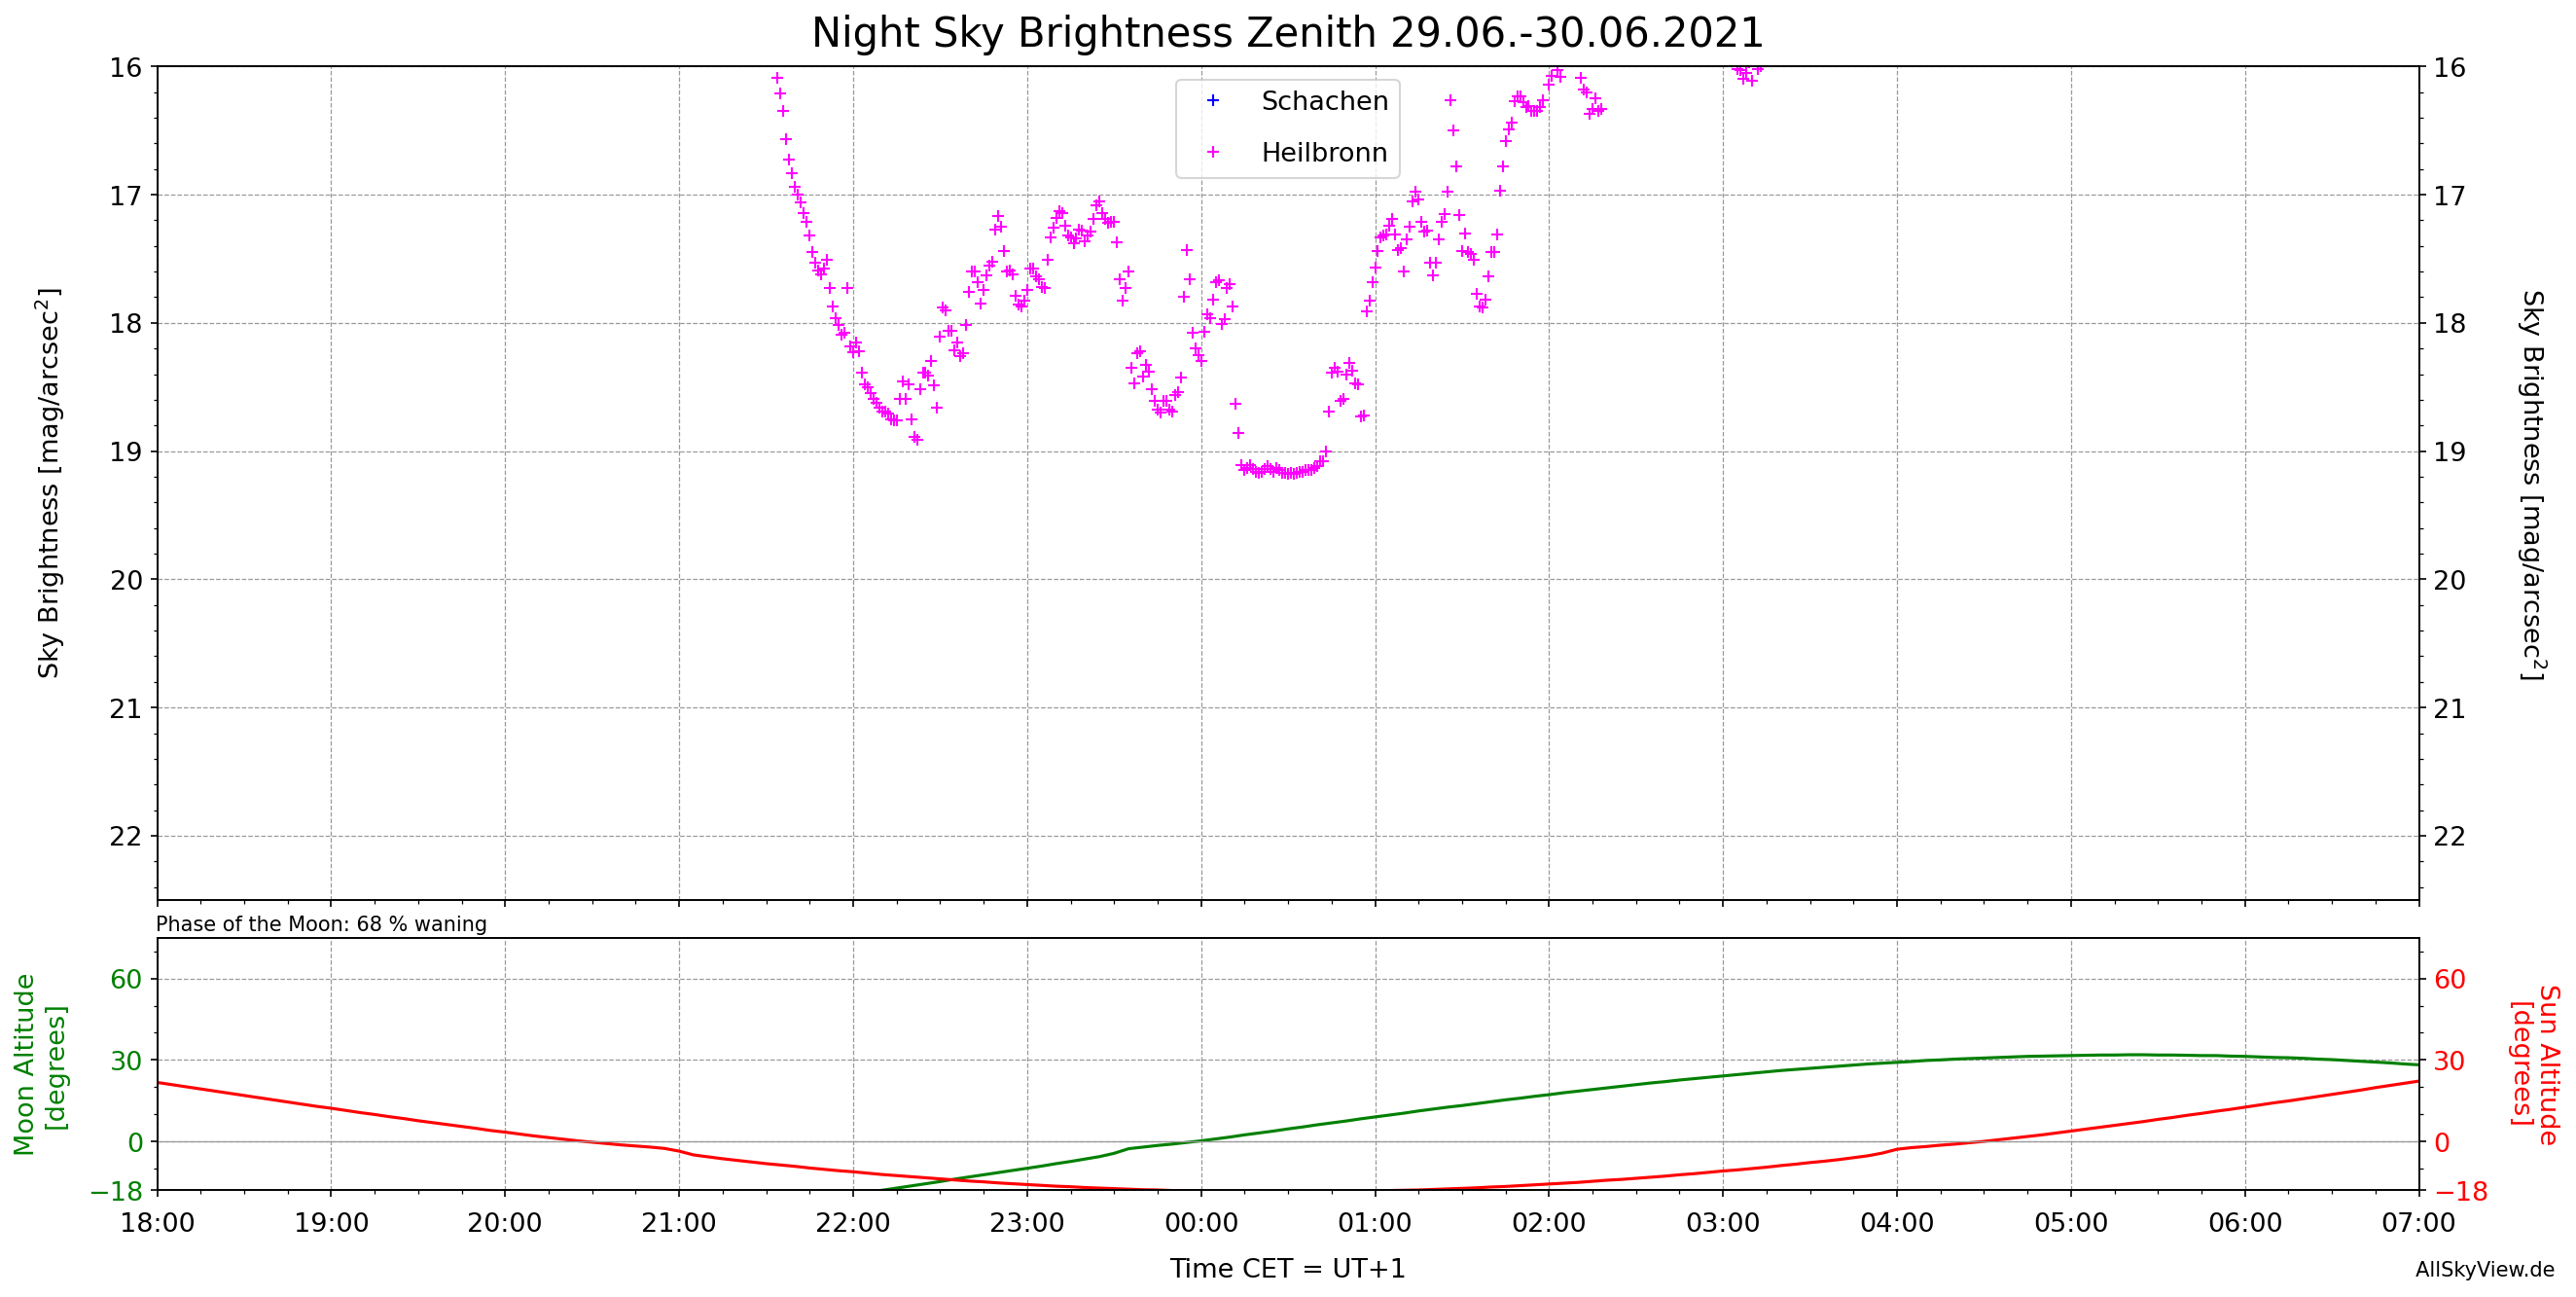 Brightness Curve of last or current Night